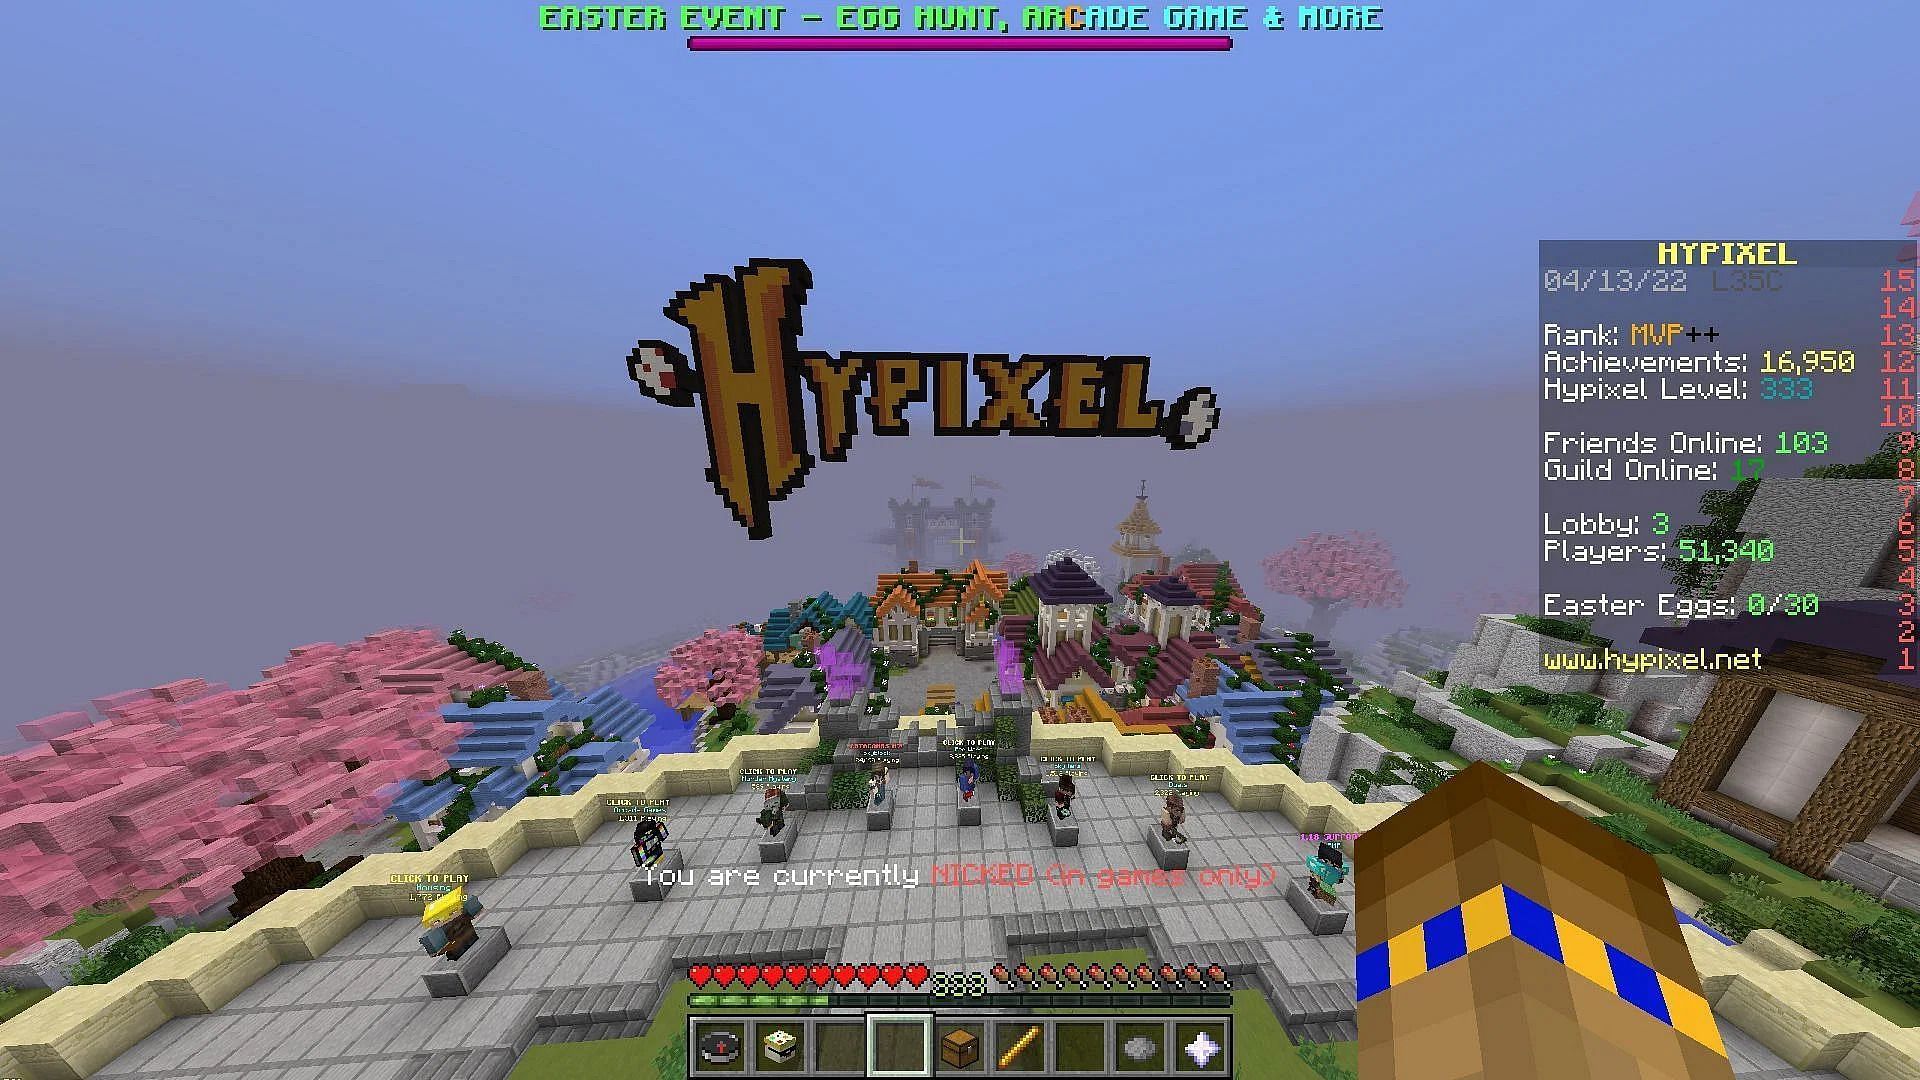 Minecraft Hypixel server